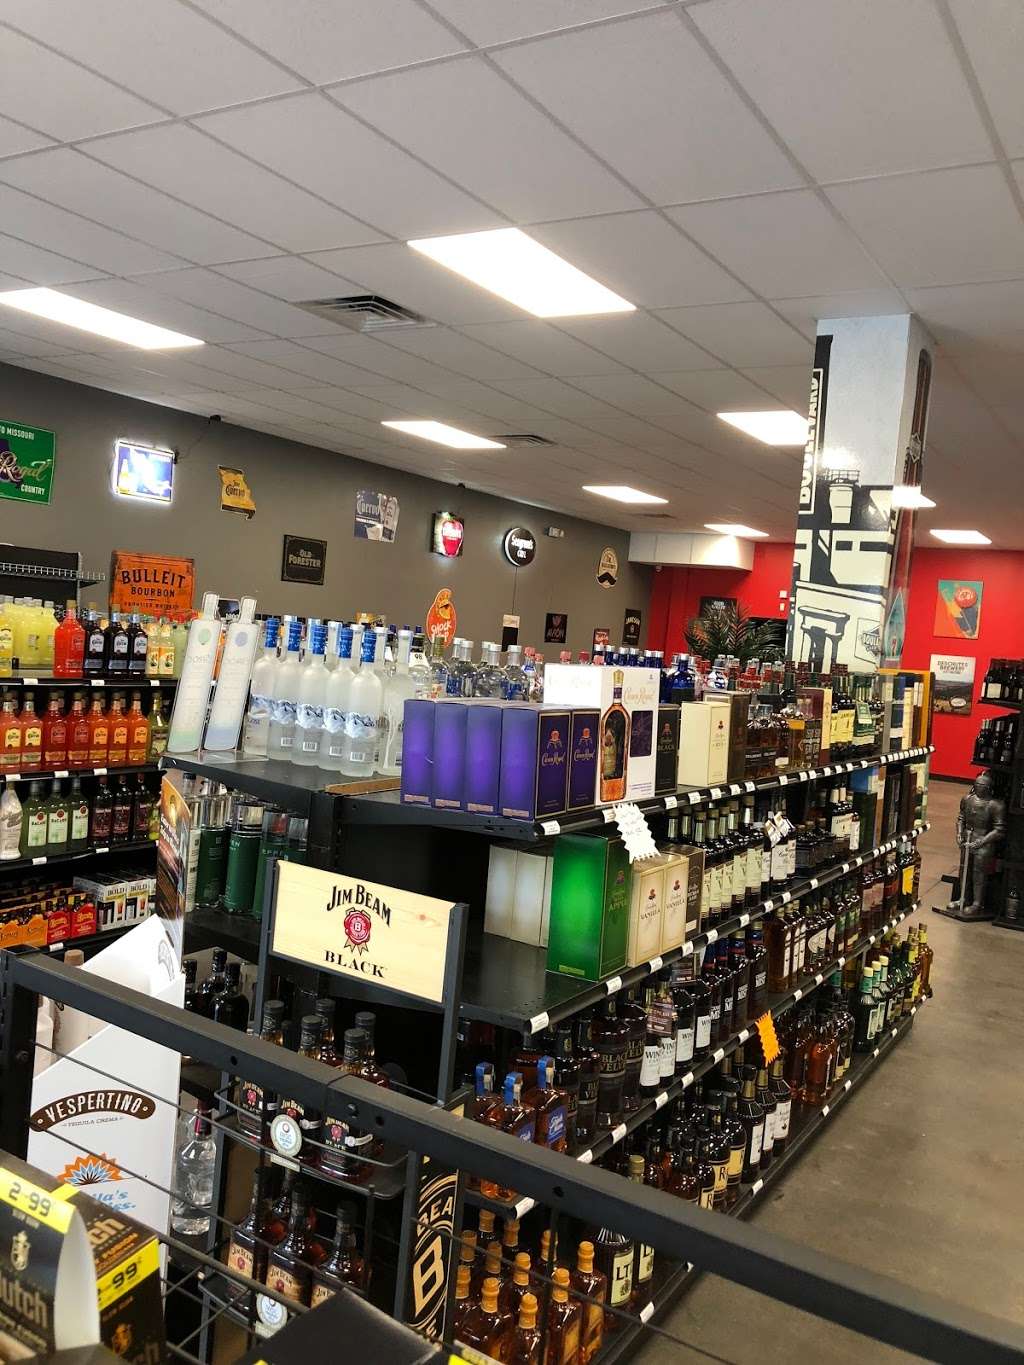 Vivion Liquor Superstore | 3528 NE Vivion Rd, Kansas City, MO 64119 | Phone: (816) 832-8545